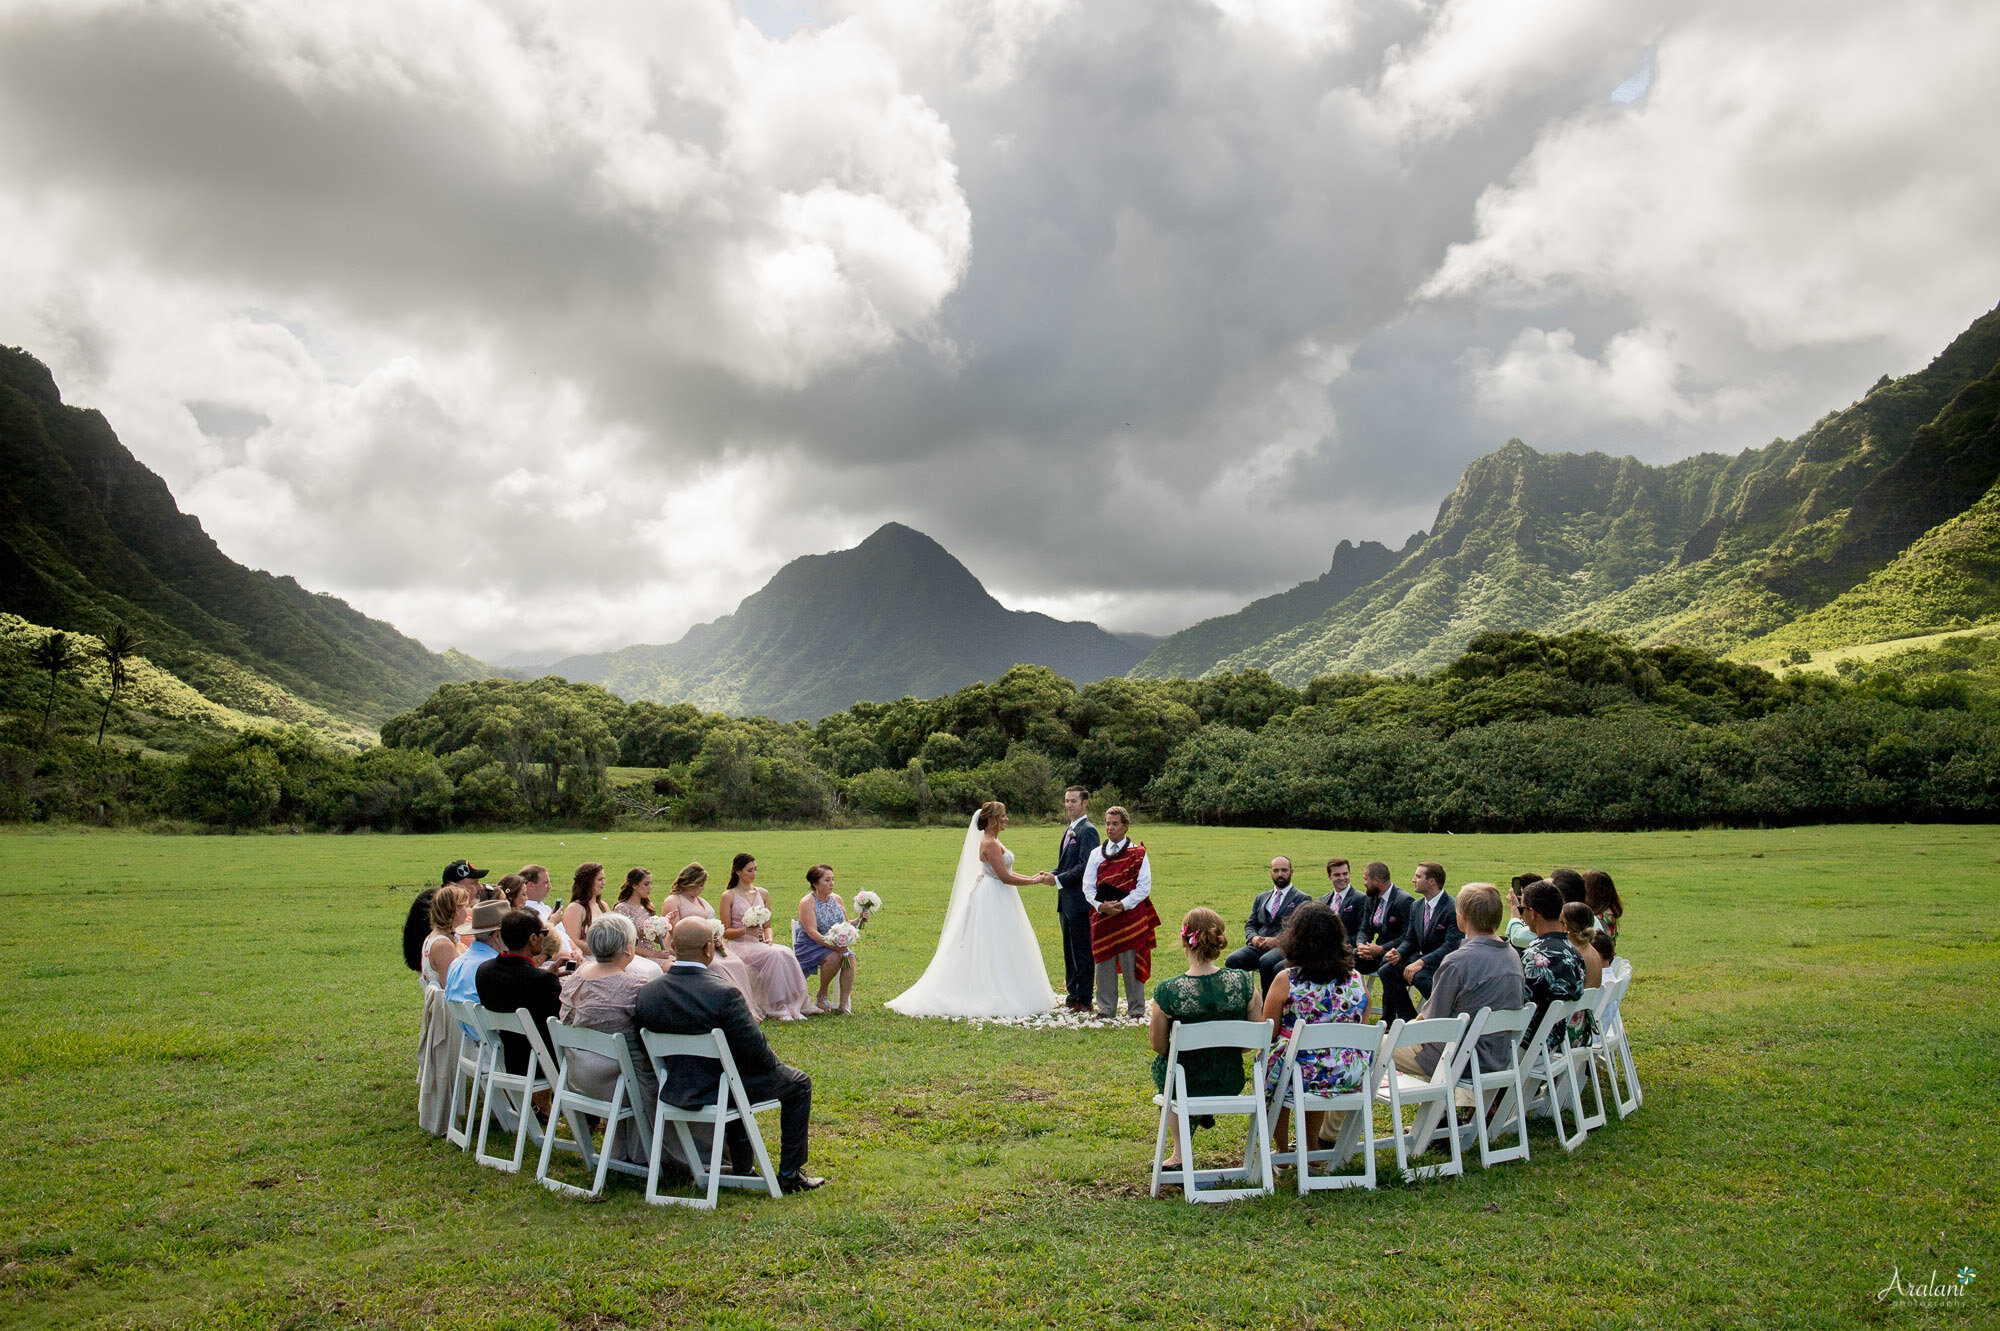 023_Brandy-Allen-001-Kualoa-Ranch-Oahu-Hawaii-Wedding-Photographer-Aralani-Photography-Brandy_Allen_W0103.jpg